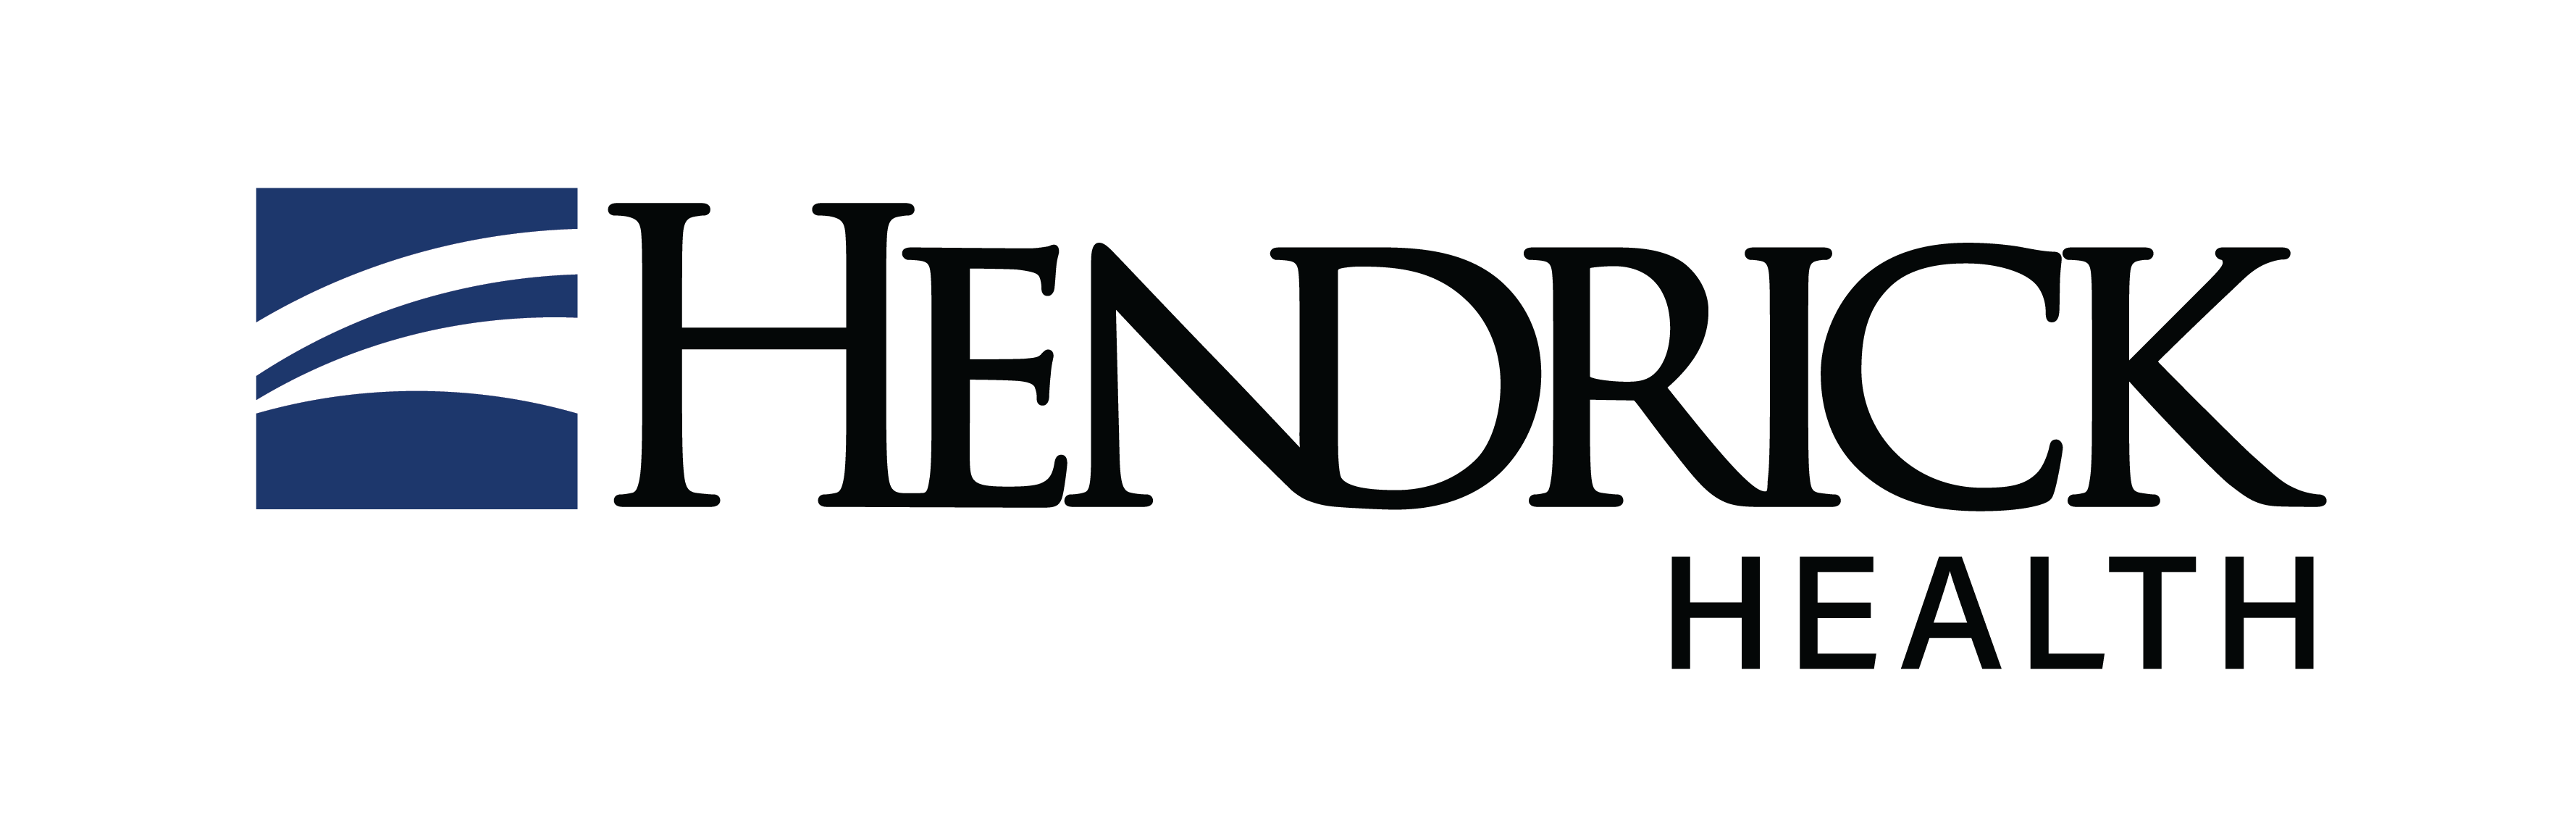 Hendrick Emergency Care Center Plaza logo